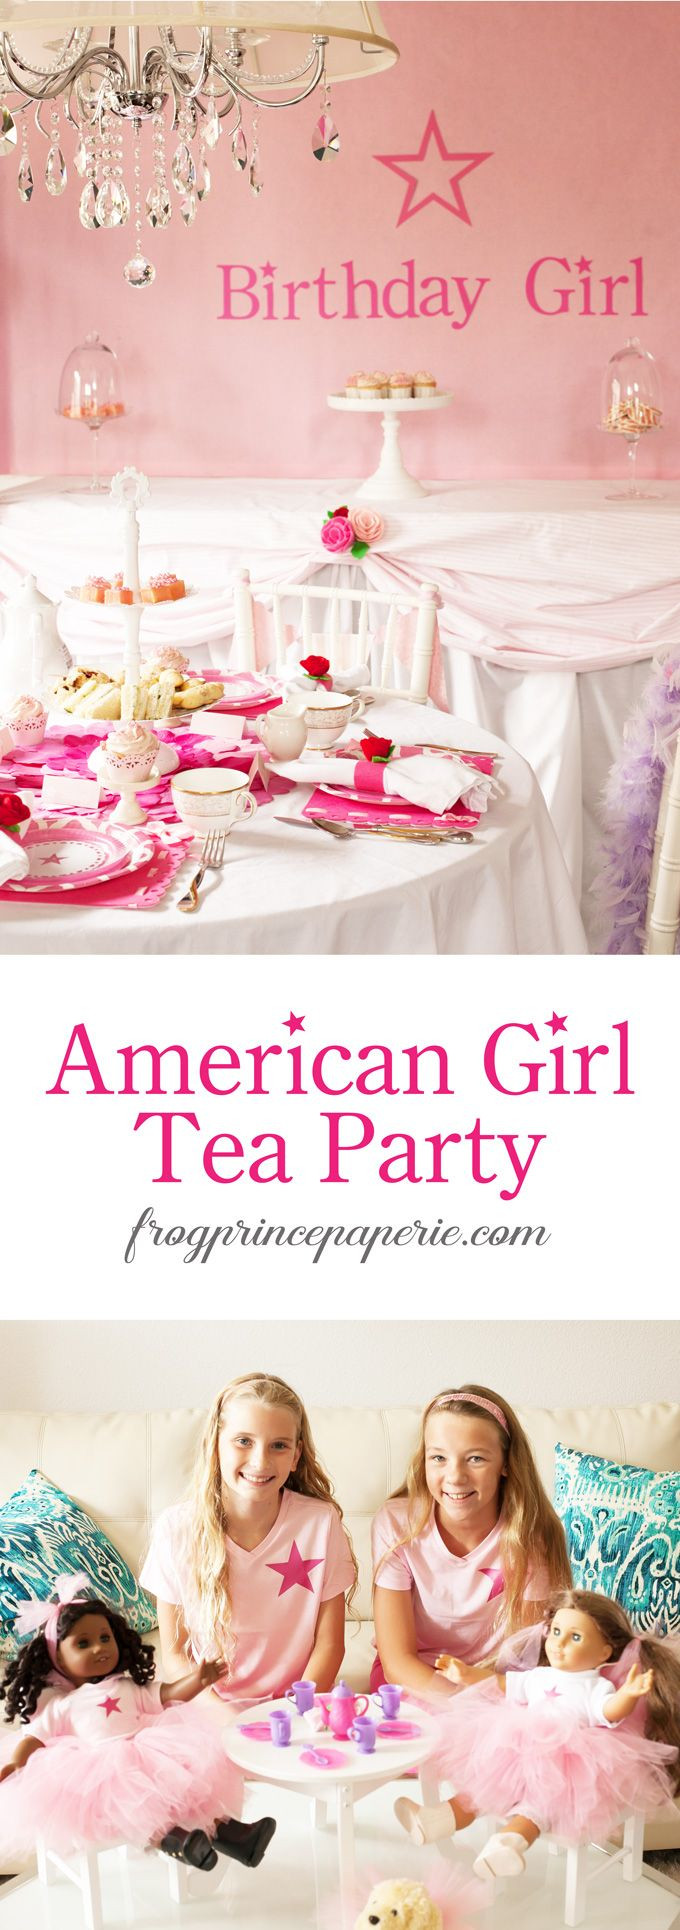 American Girl Tea Party Ideas
 6283 best Best Parties on Pinterest images on Pinterest